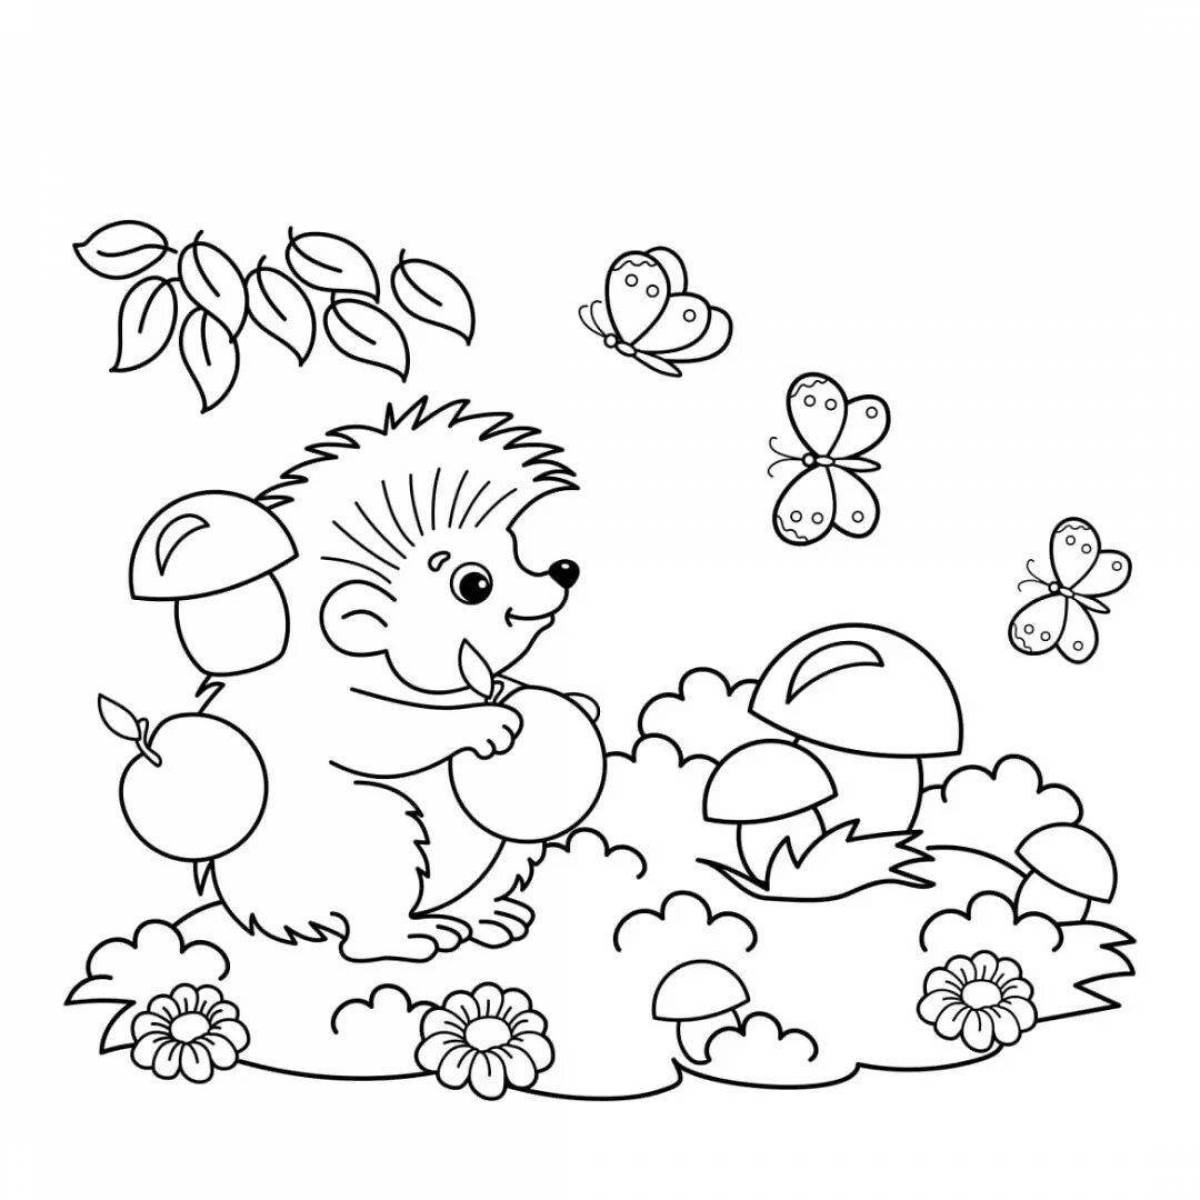 Playful hedgehog with mushrooms